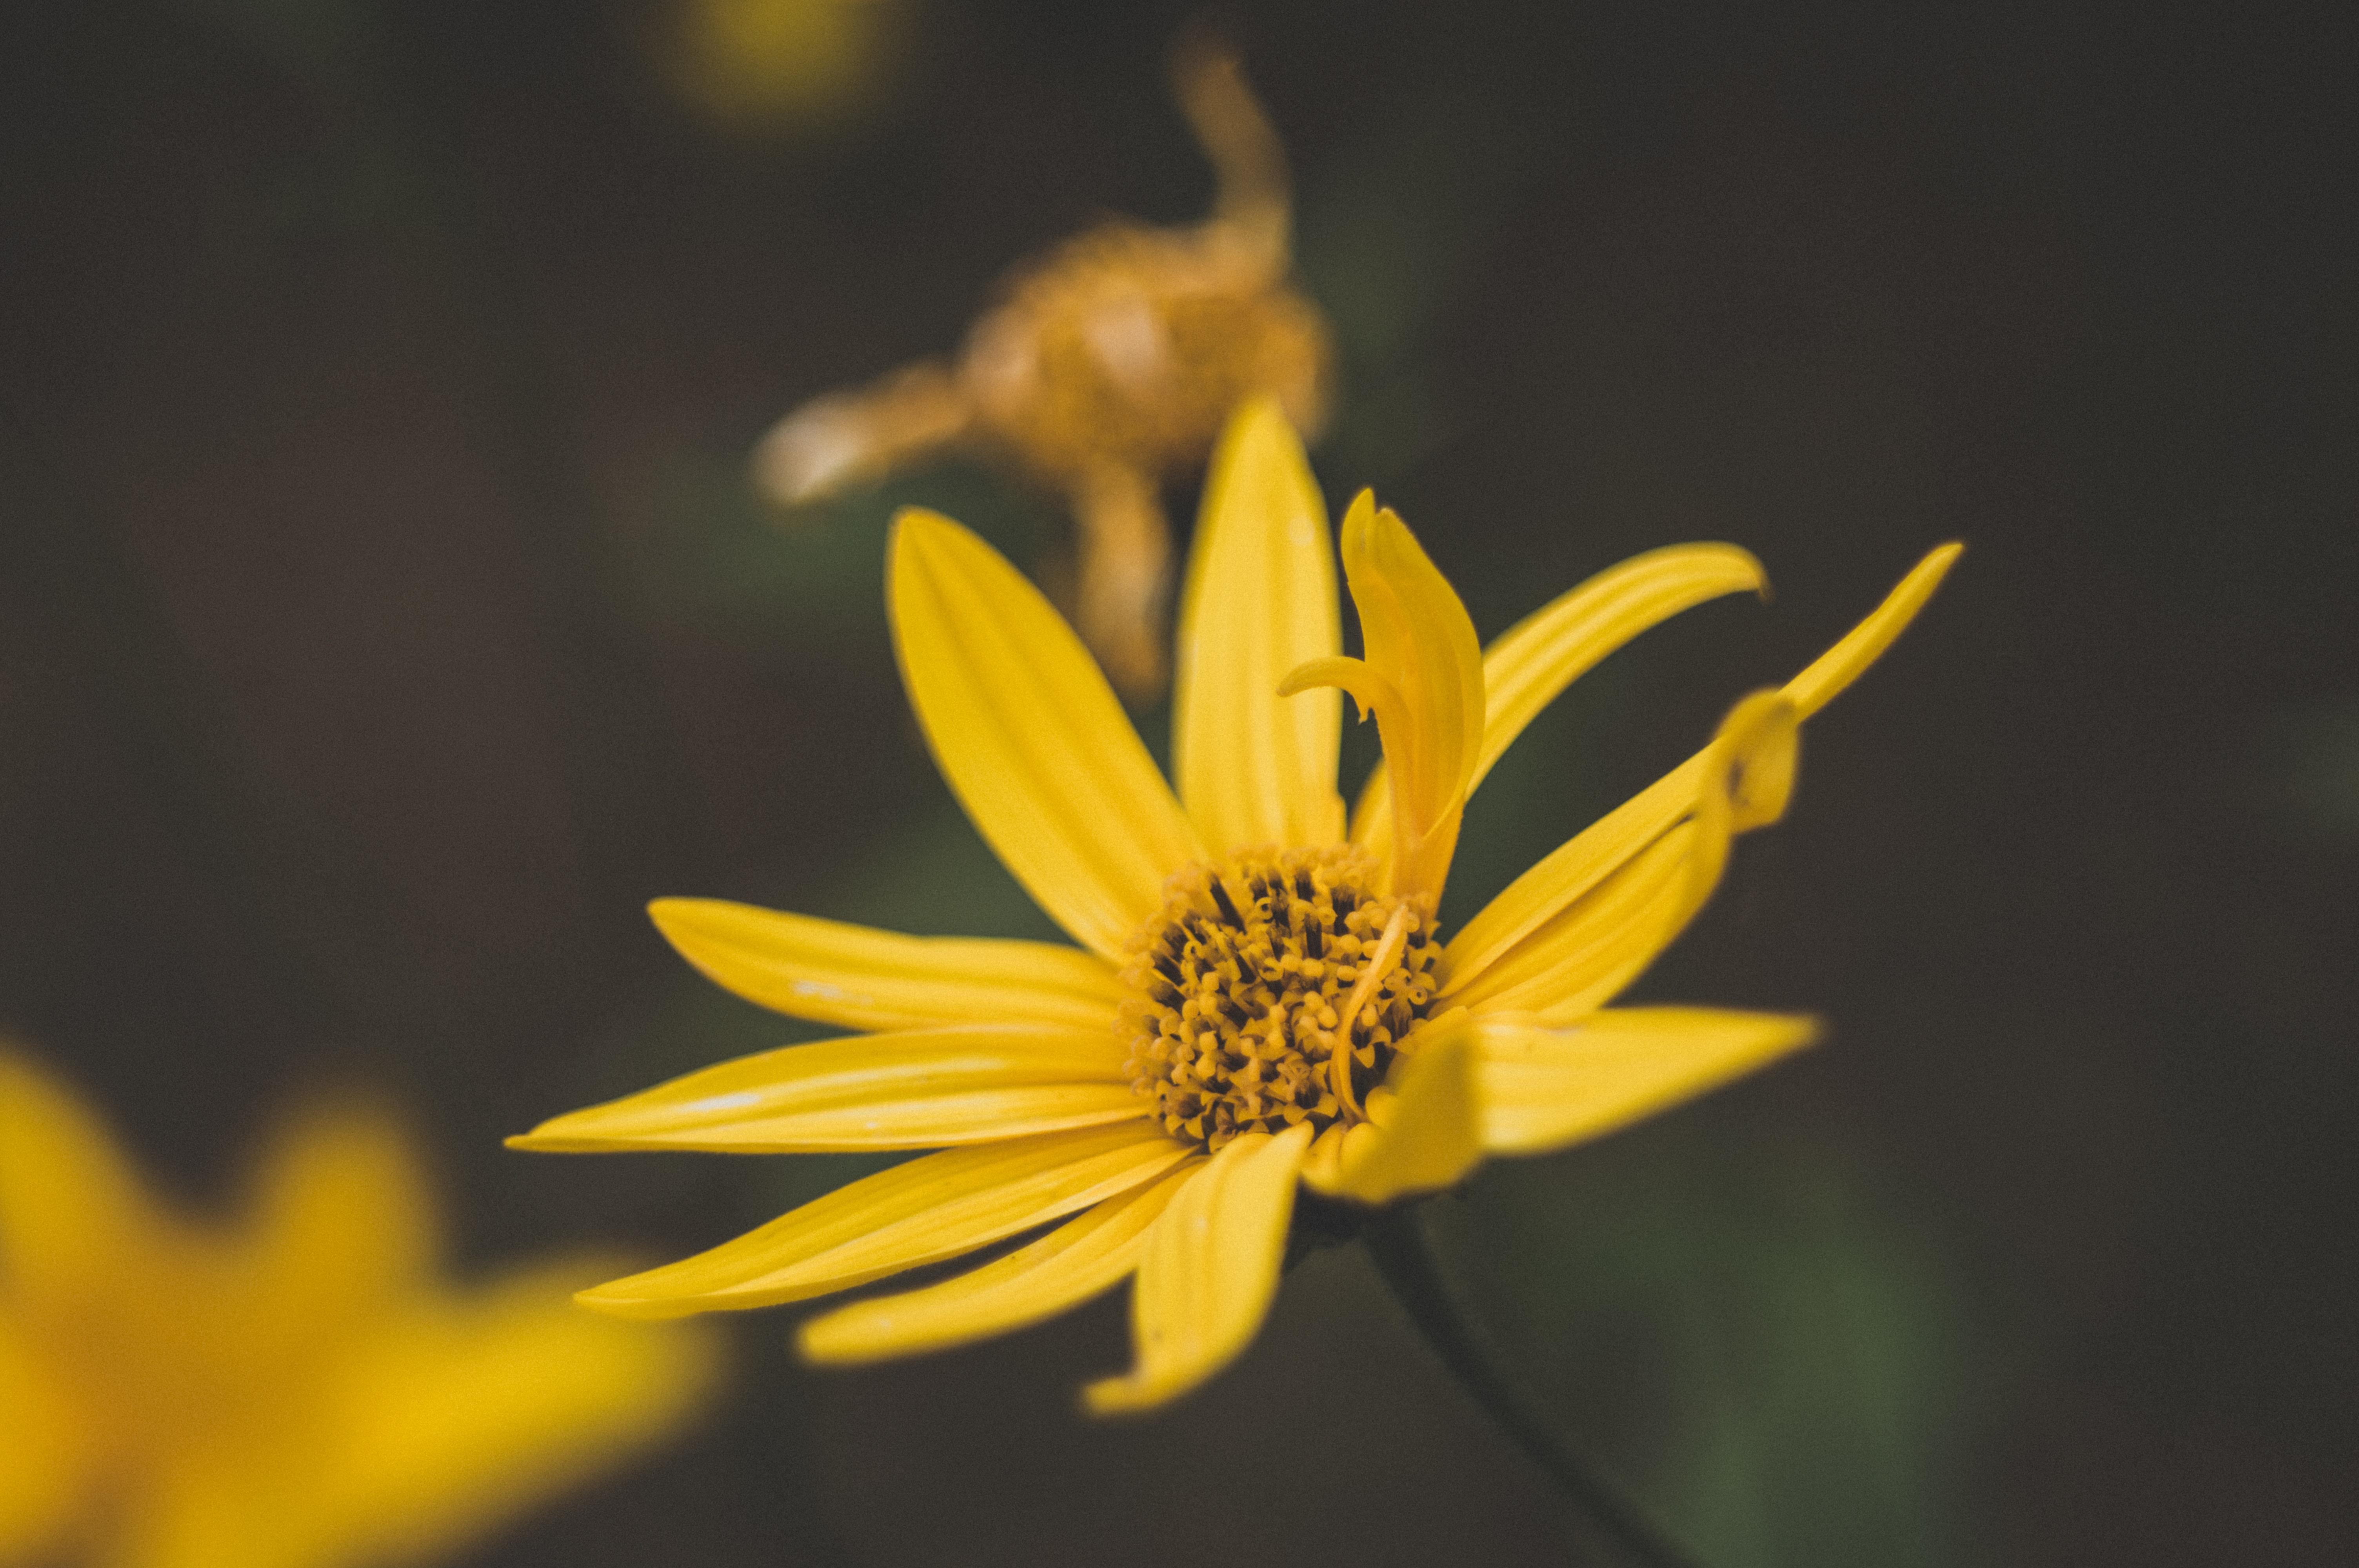 1000+ Beautiful Yellow Flower Photos · Pexels · Free Stock Photos